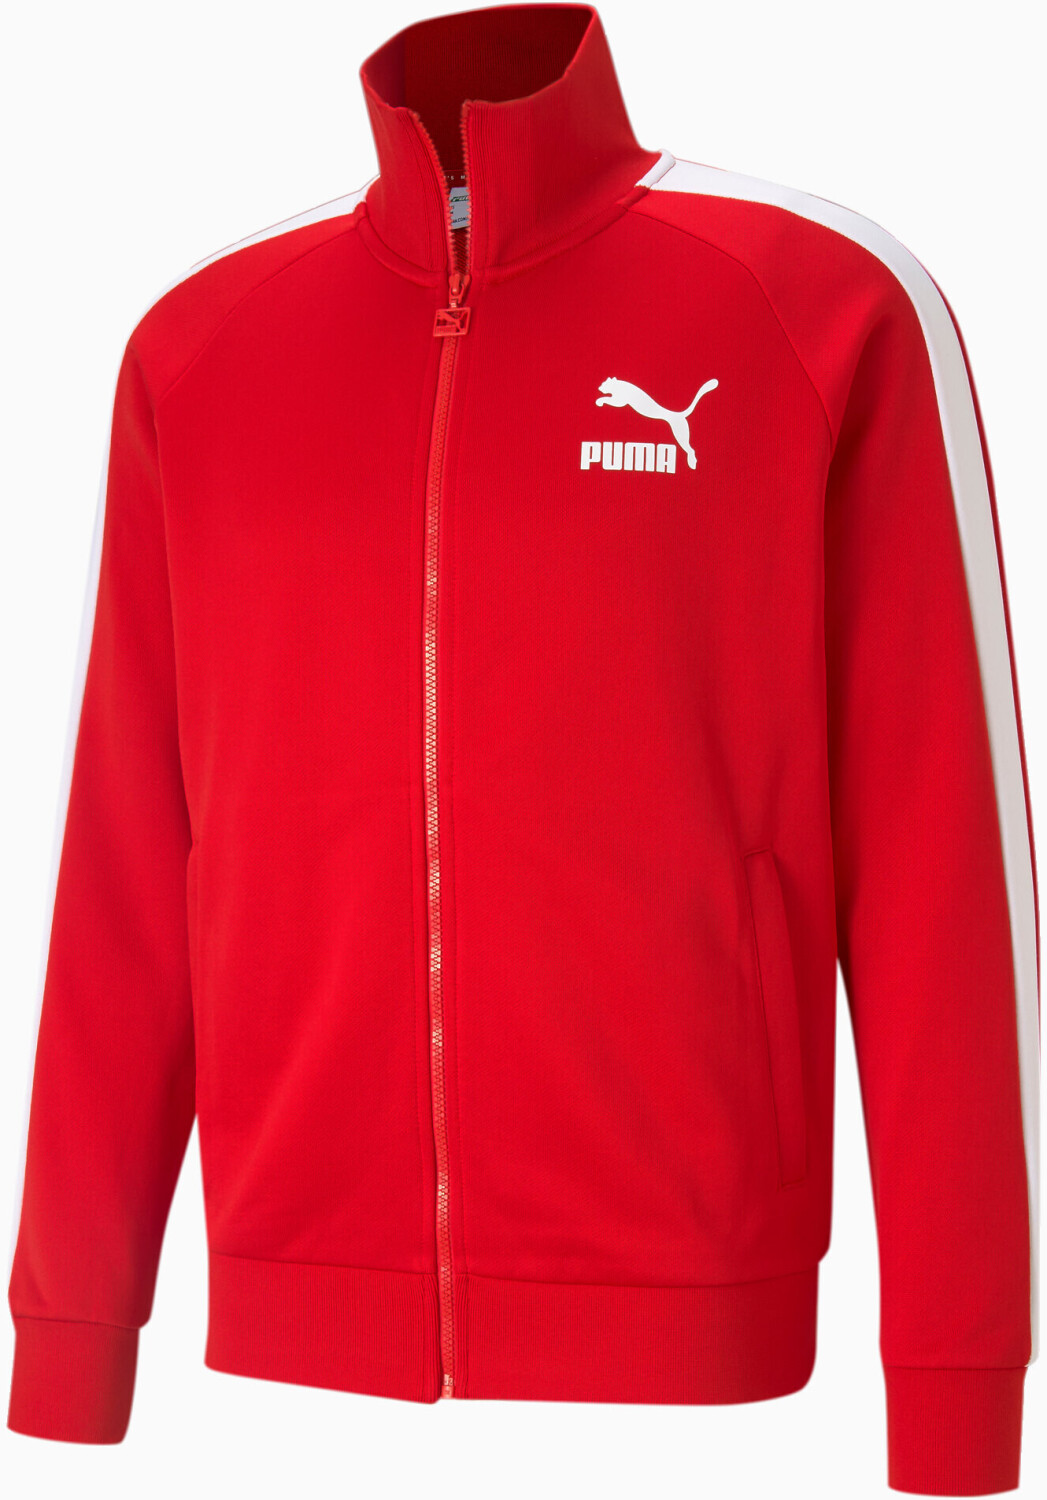 Puma Iconic T7 Men's Track Jacket (530094) high risk red ab 45,95 € |  Preisvergleich bei